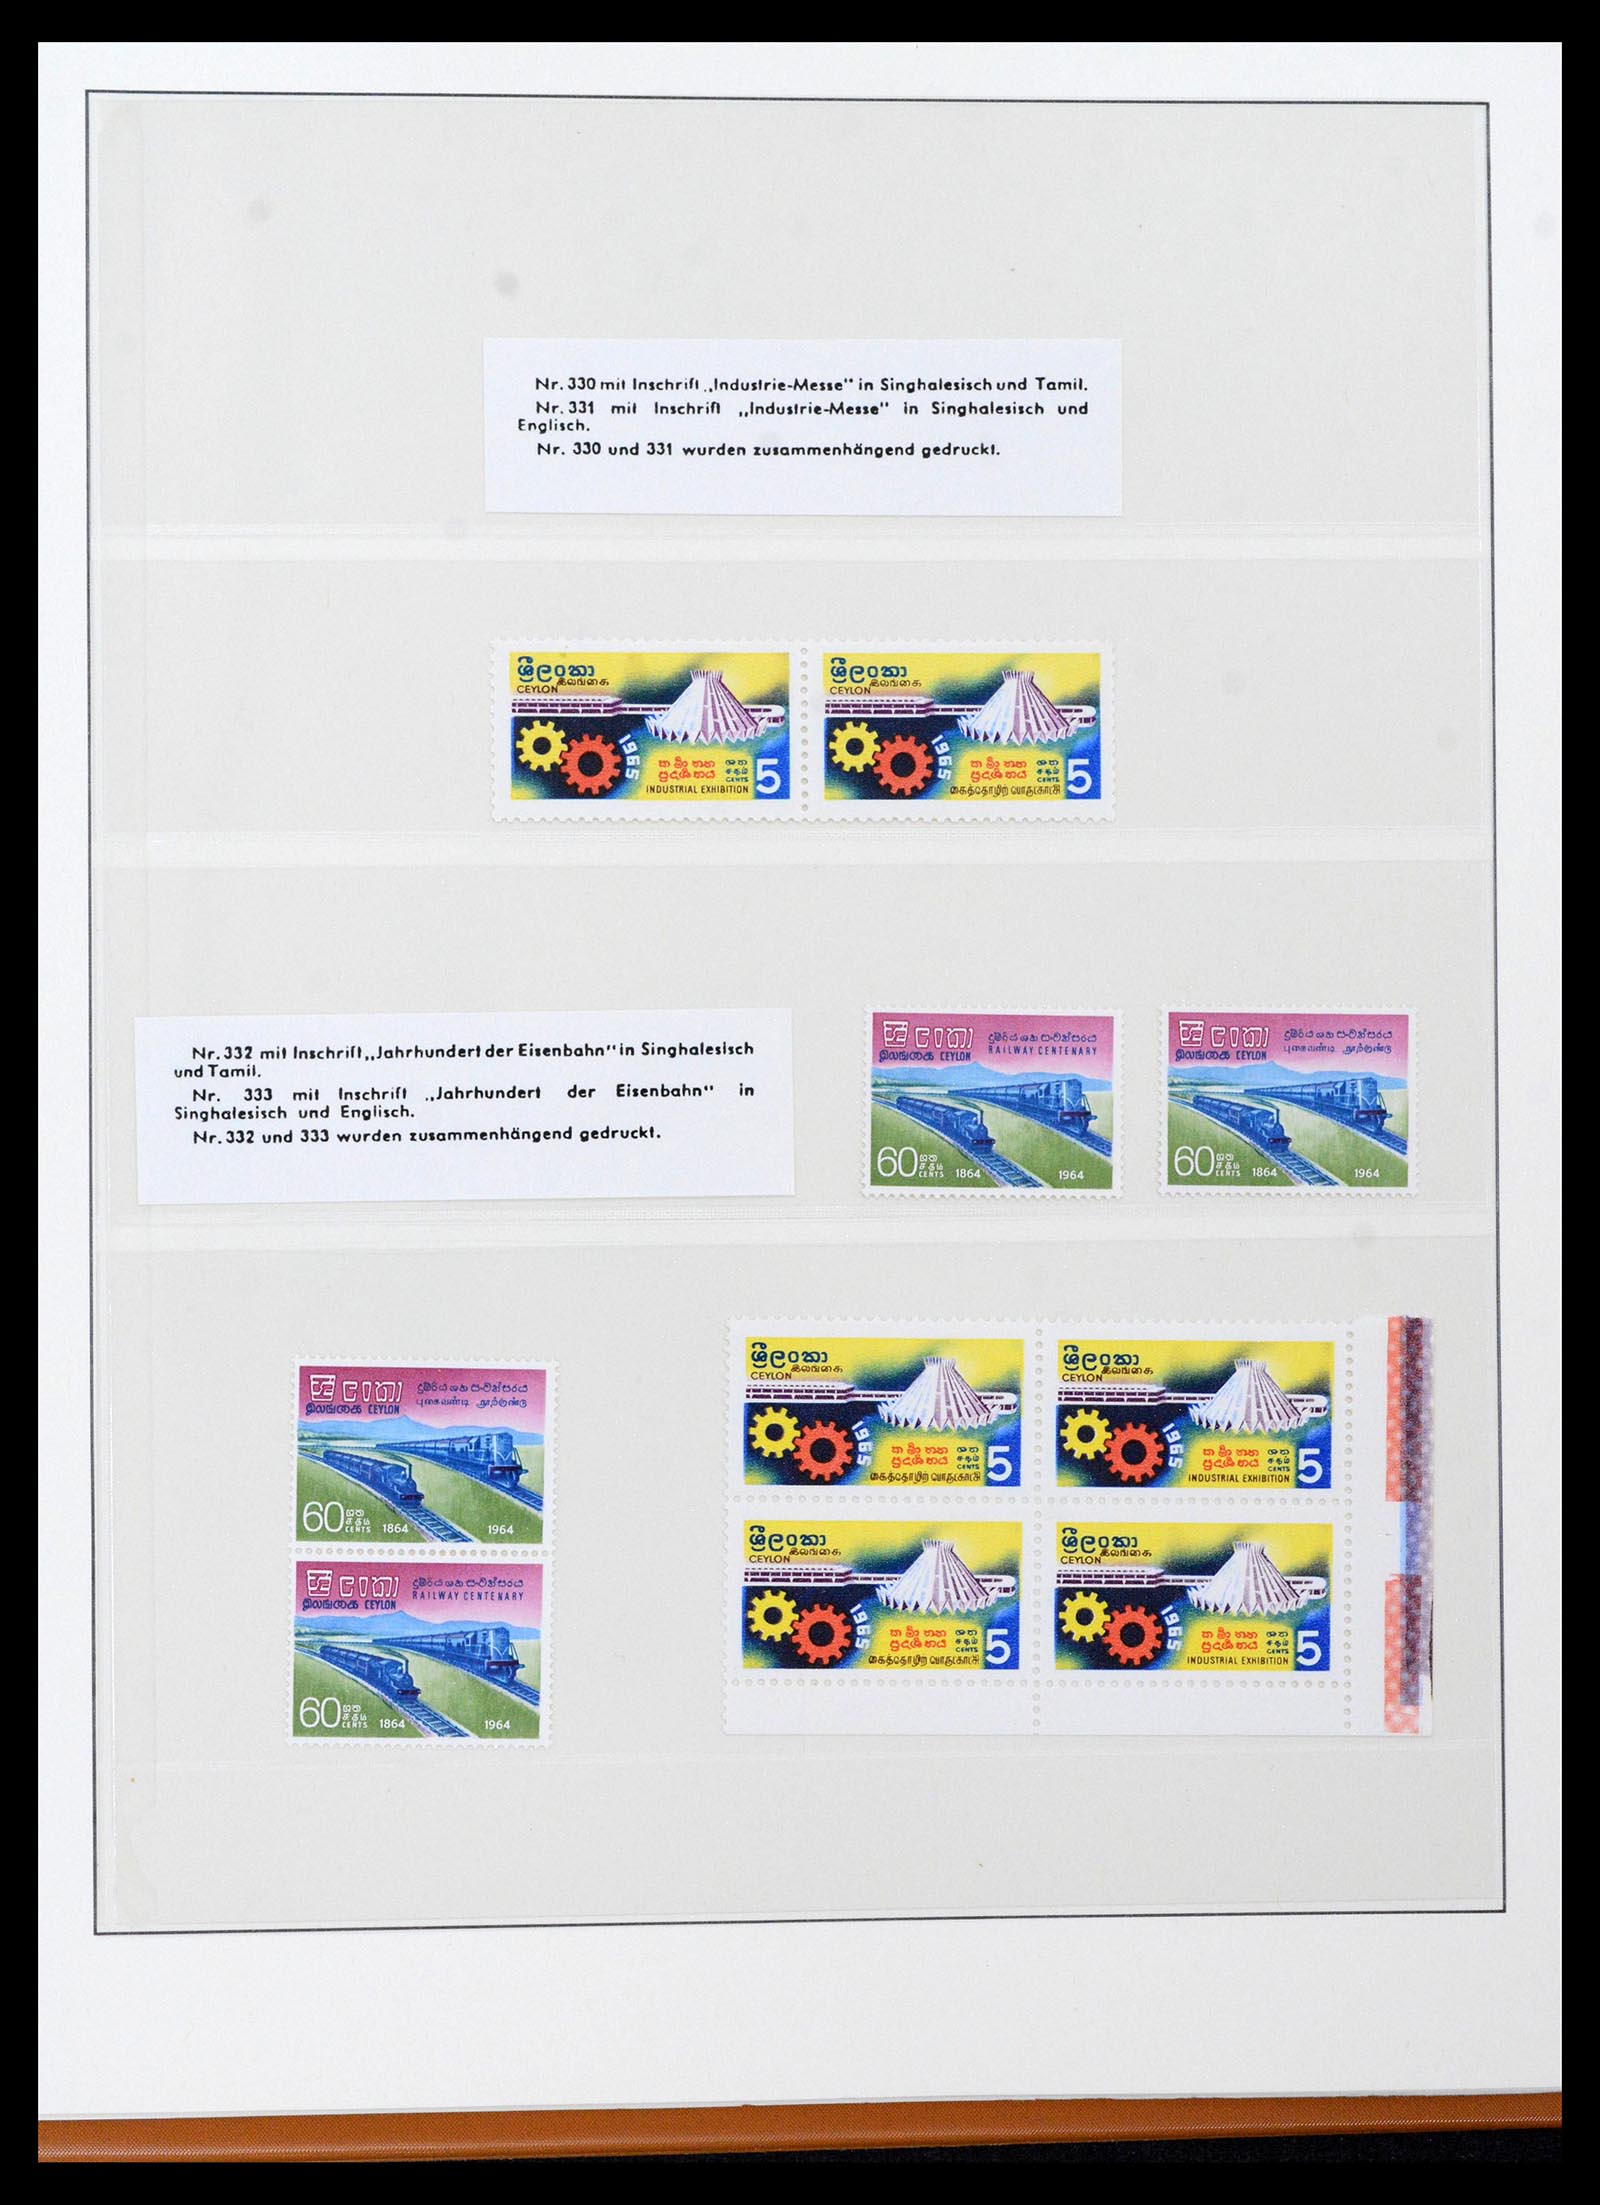 39003 0028 - Stamp collection 39003 Ceylon/Sri Lanka 1857-2003.